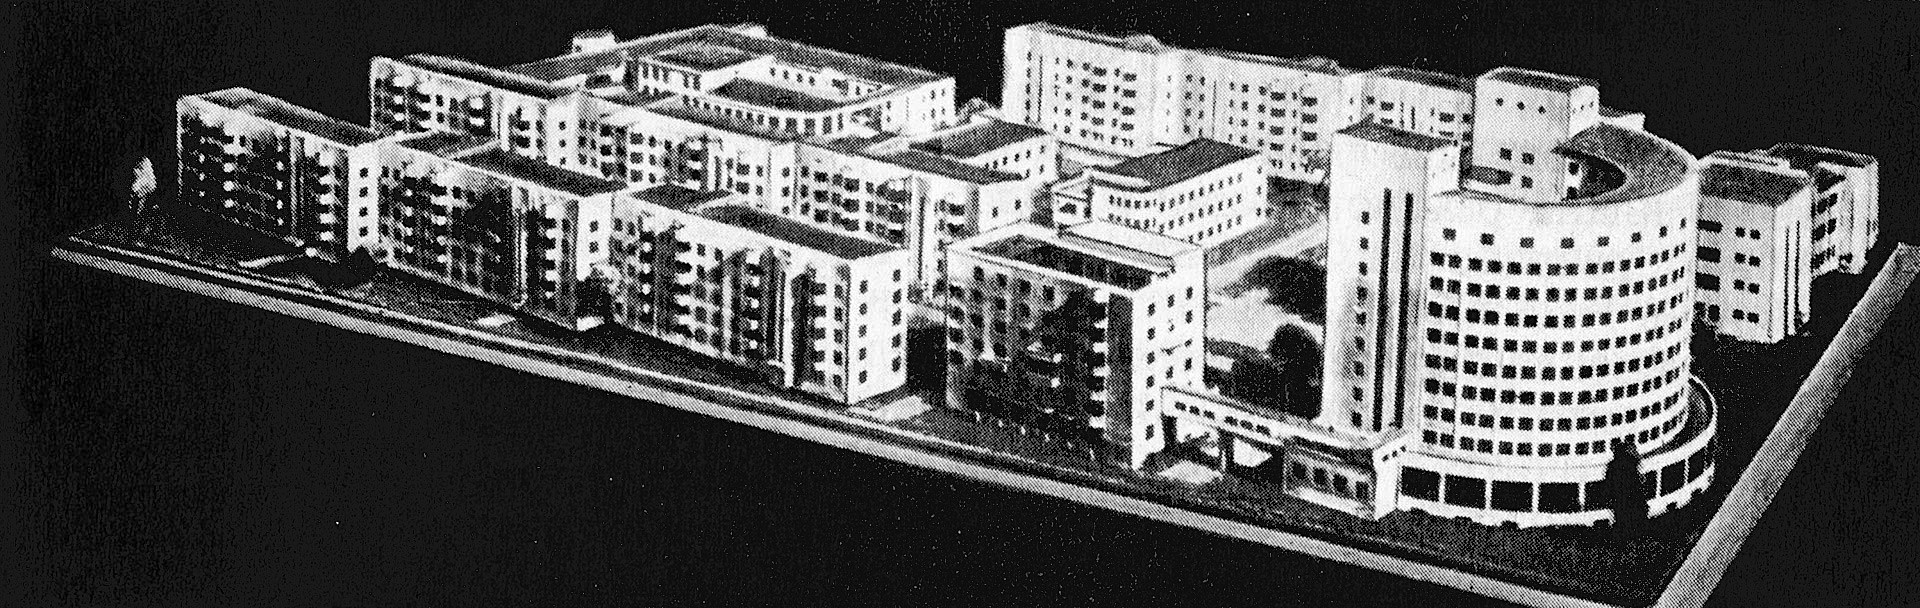 Original plan for Chekists’ Village by Ivan Antonov and Veniamin Sokolov in 1929